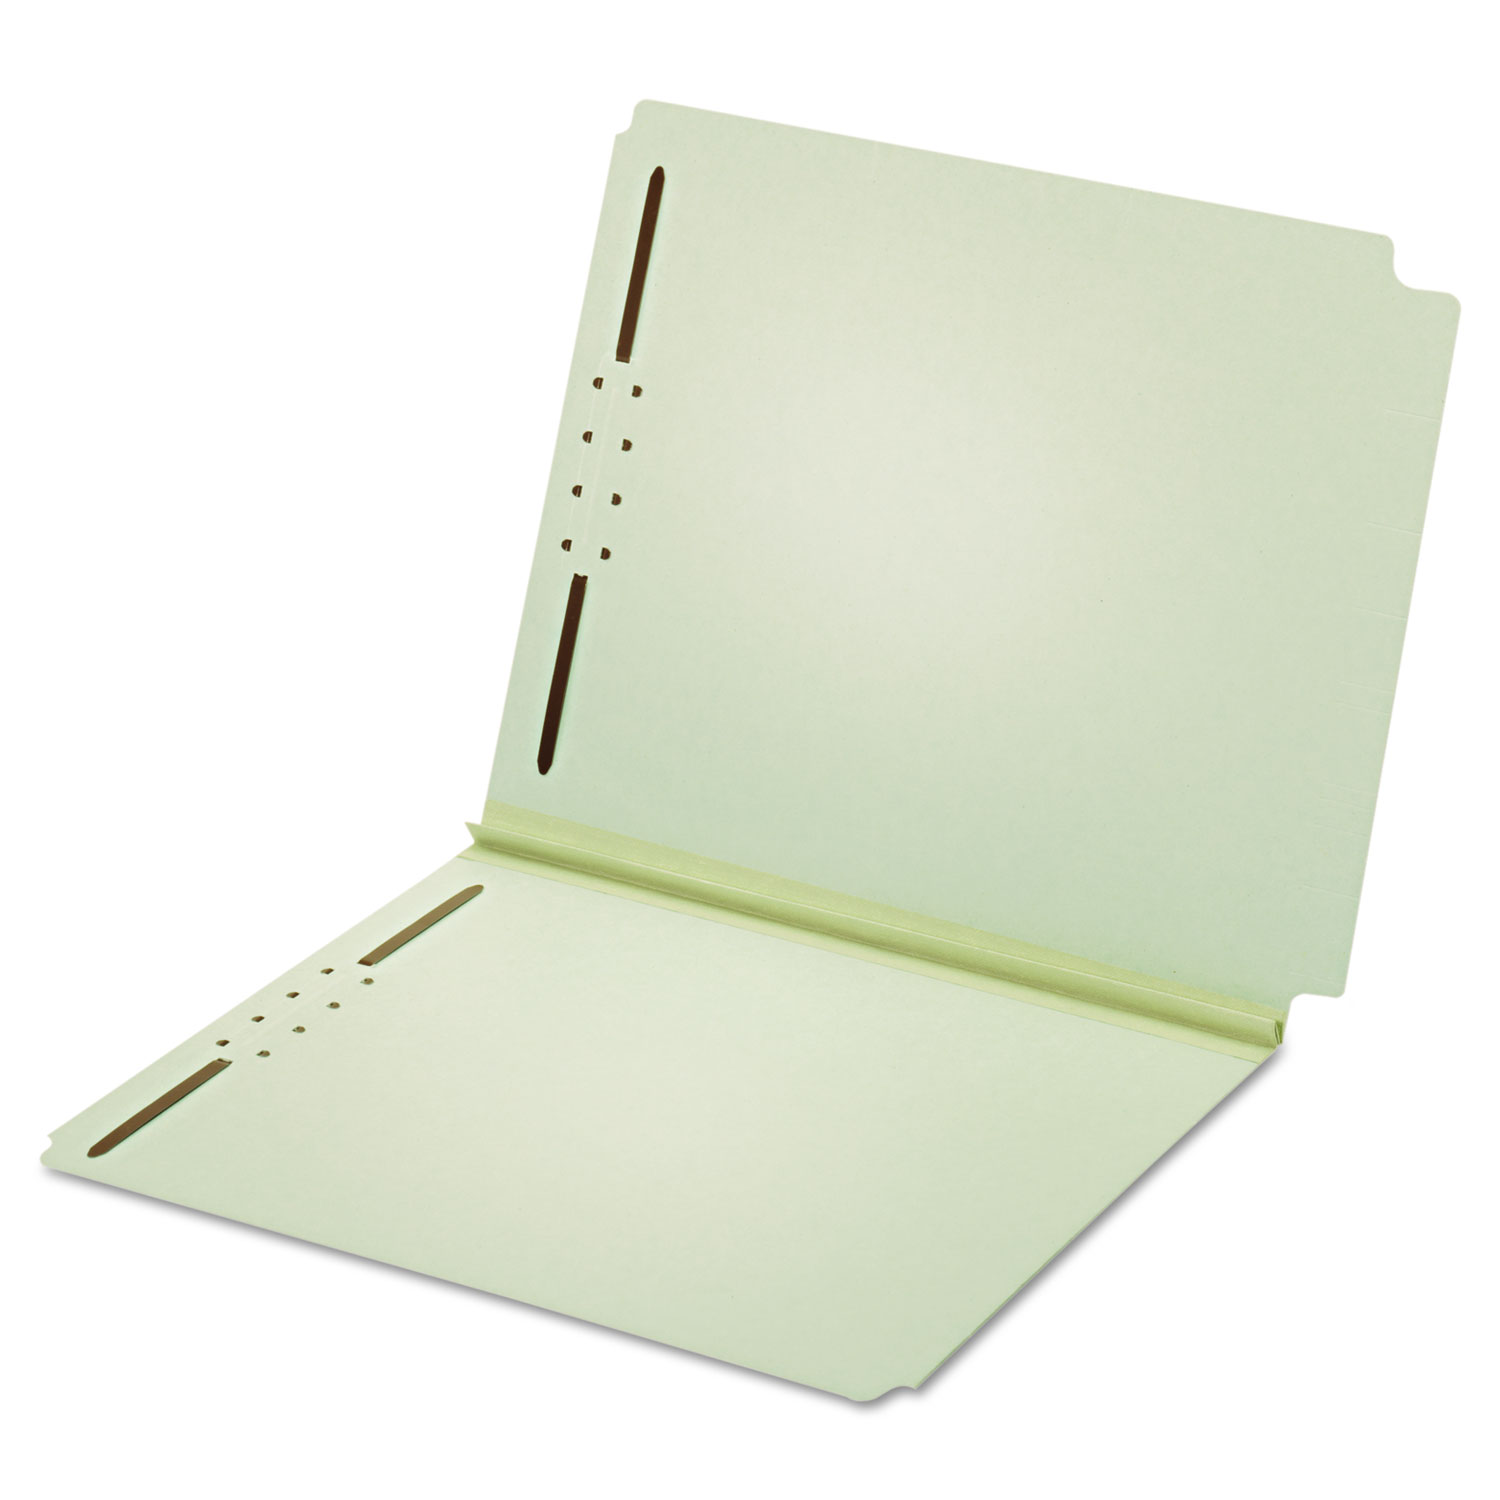  Pendaflex 45715 Dual Tab Pressboard Folder with Two Fasteners, Straight Tab, Letter Size, Light Green, 25/Box (PFX45715) 